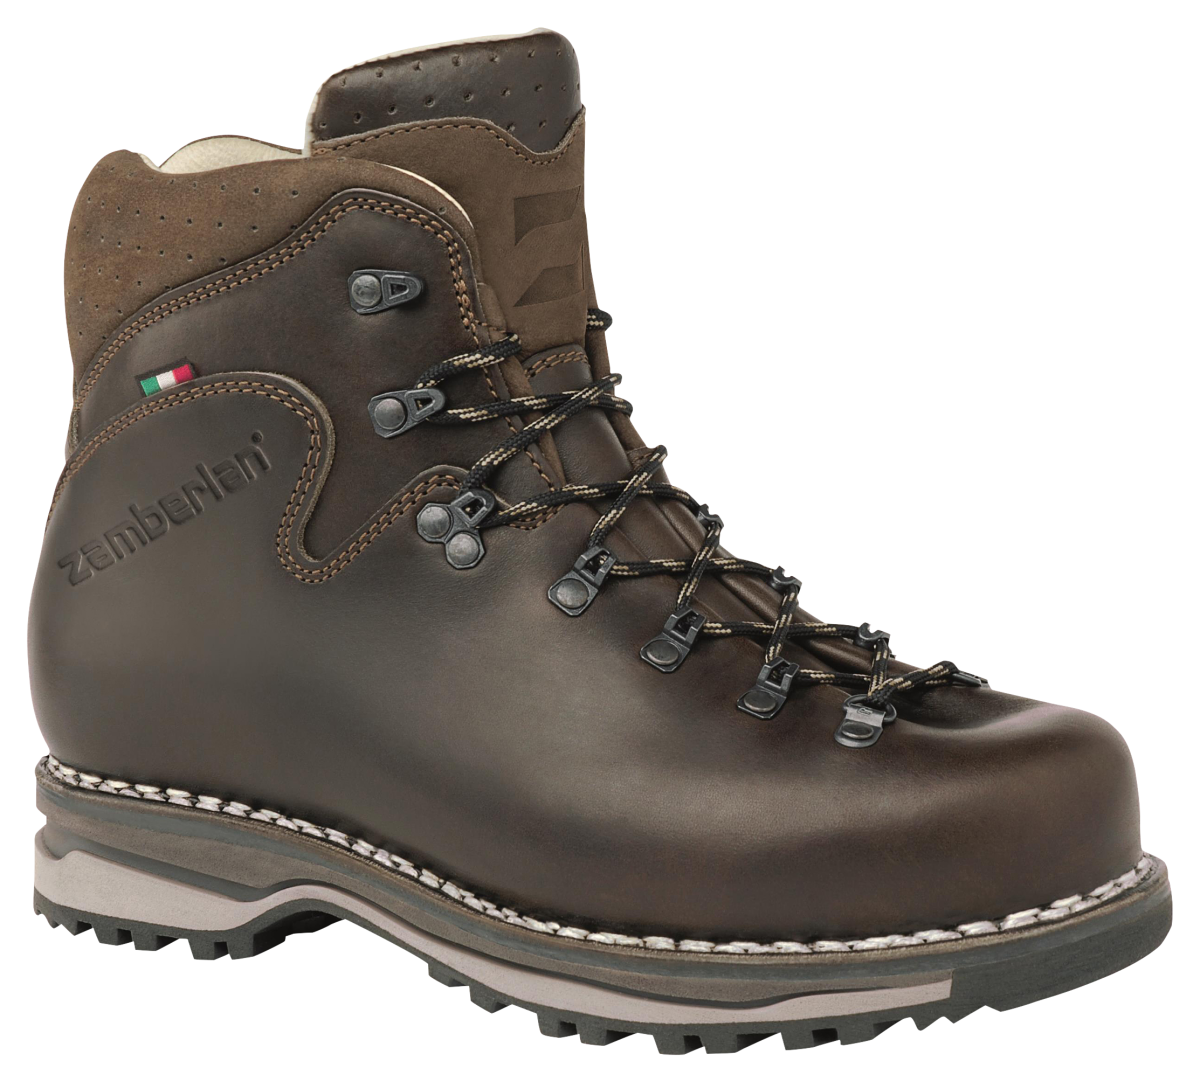 Zamberlan Latemar NW Hiking Boots for Men - Waxed Dark Brown - 8.5M